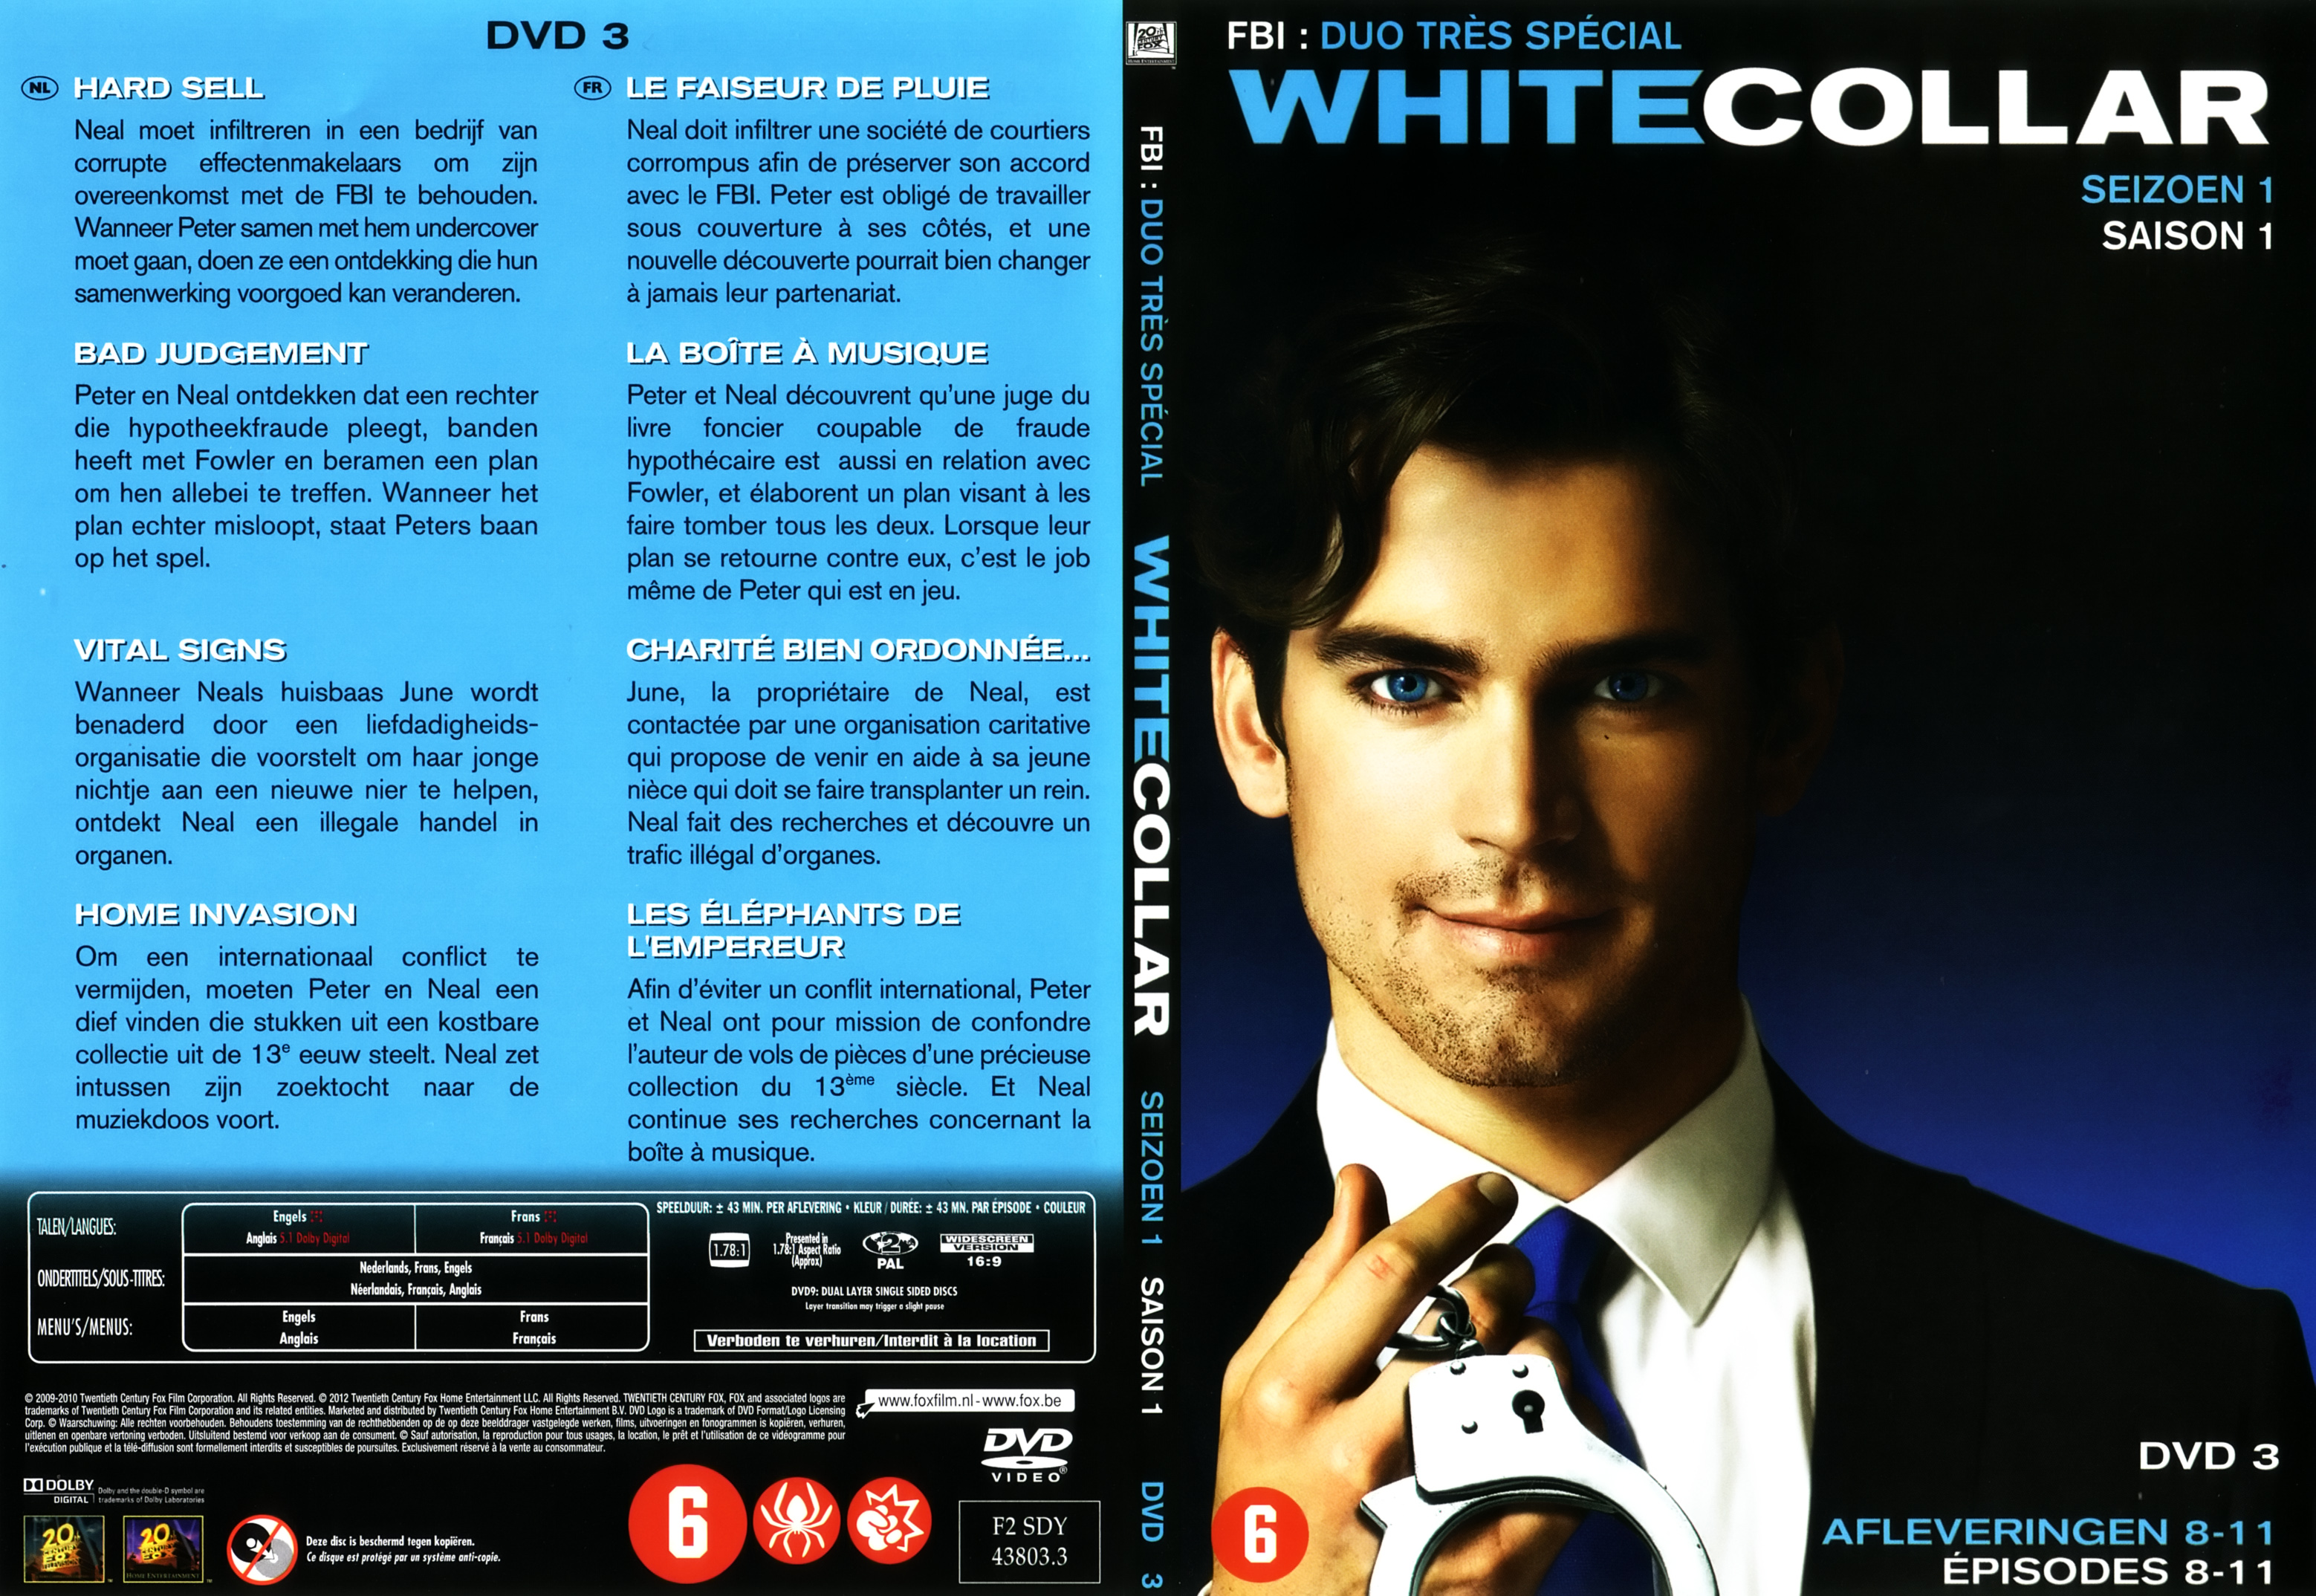 Jaquette DVD White collar saison 1 DVD 3